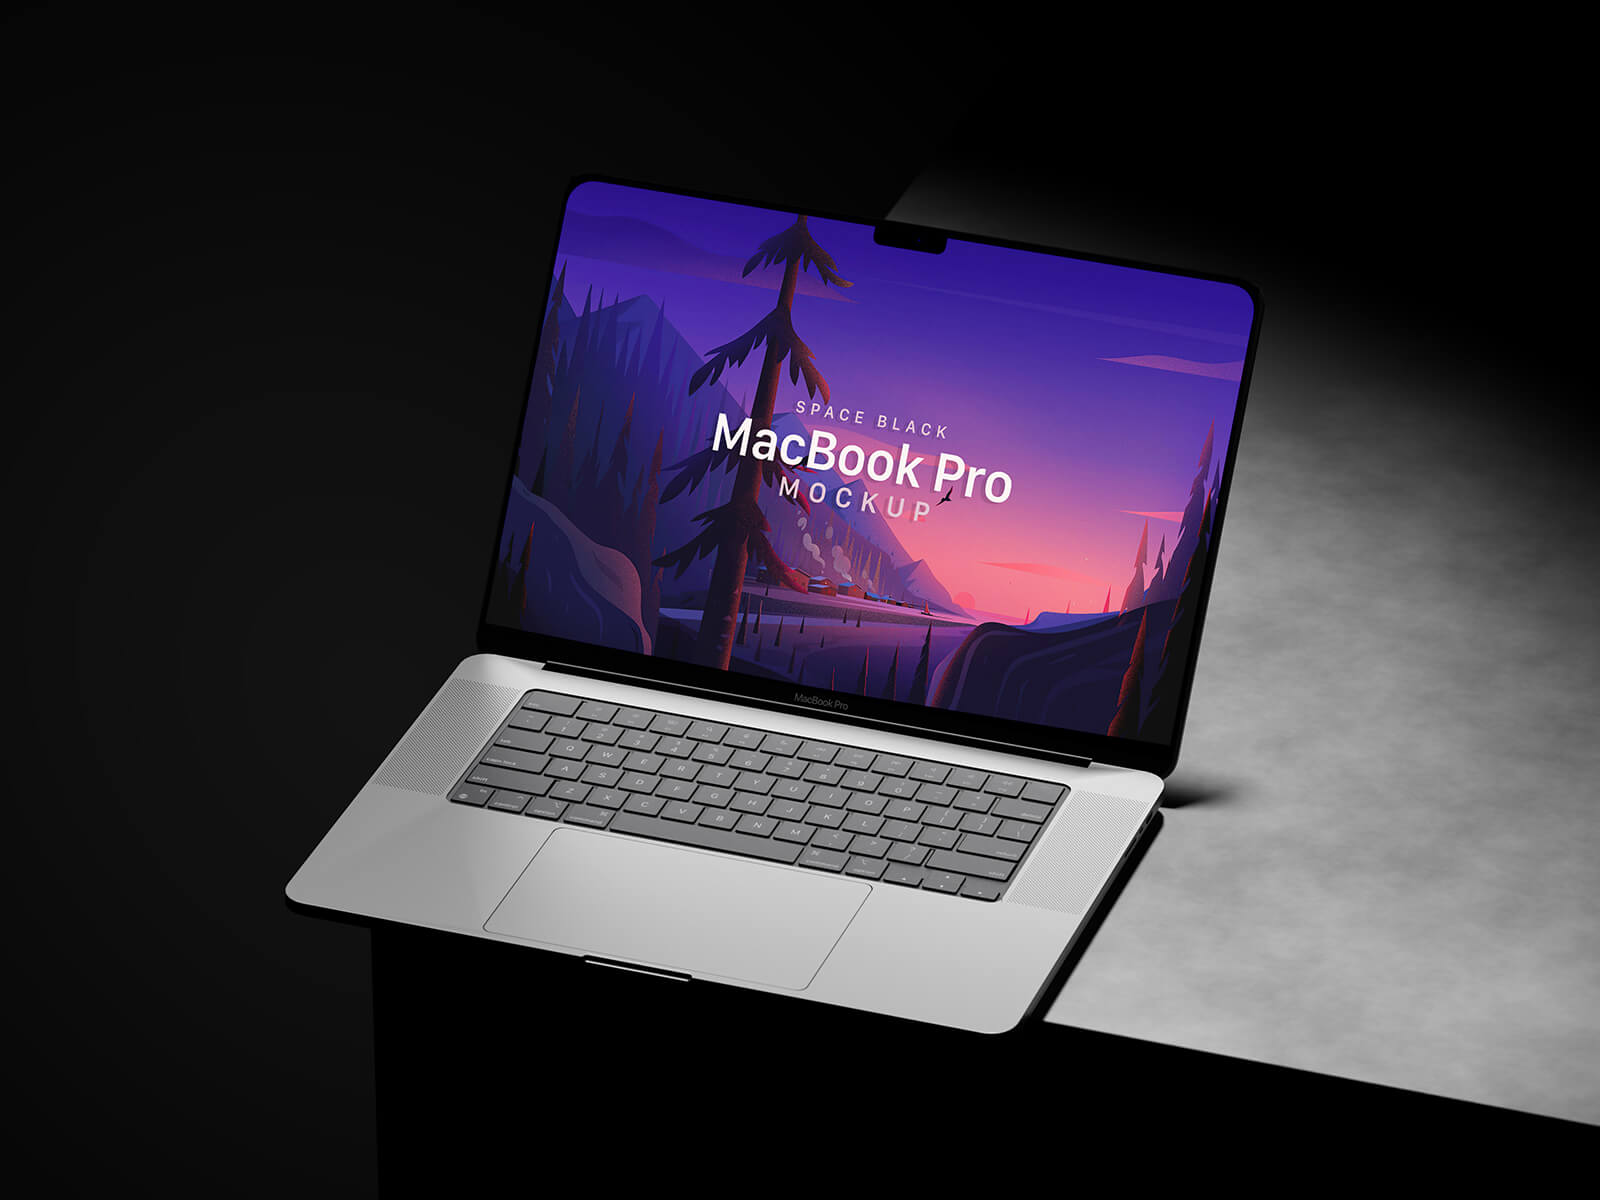 Space Black MacBook Pro Mockup